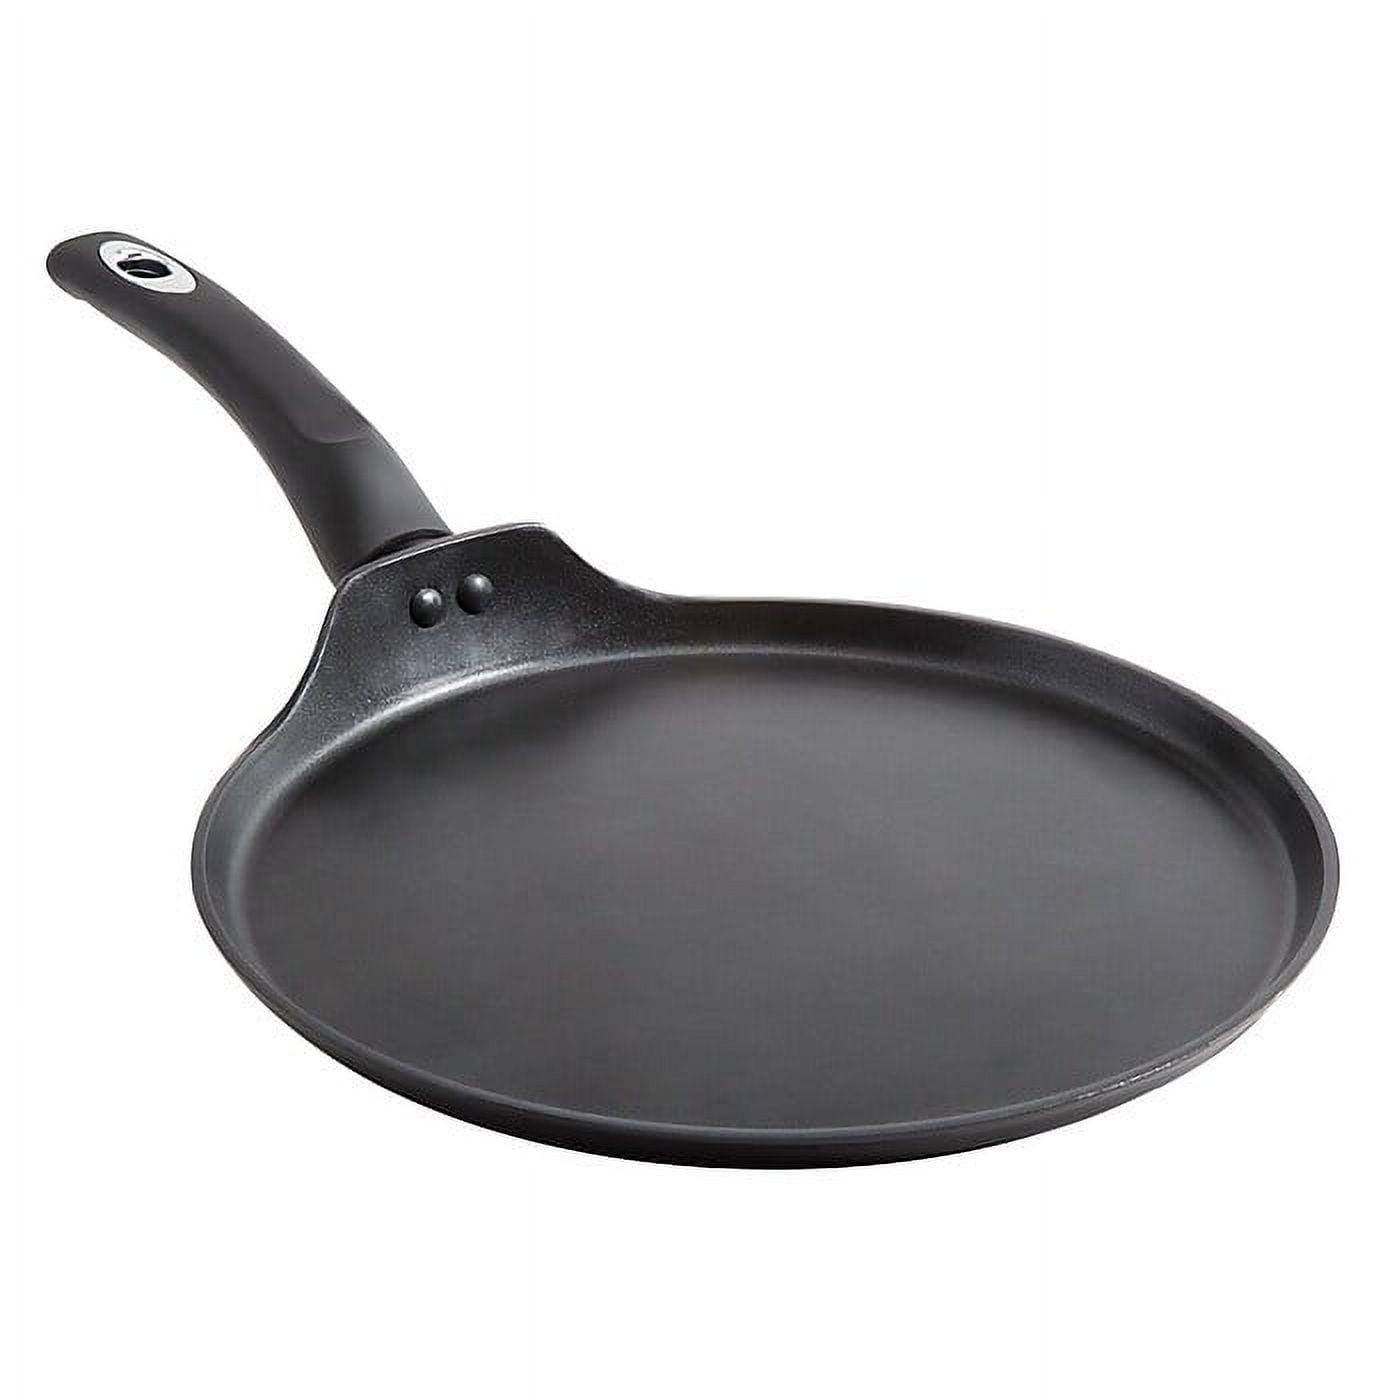 Clockitchen 7-Mold Pancake Pan Nonstick Breakfast Griddle, Gas  Compatible,9.7 inch Black